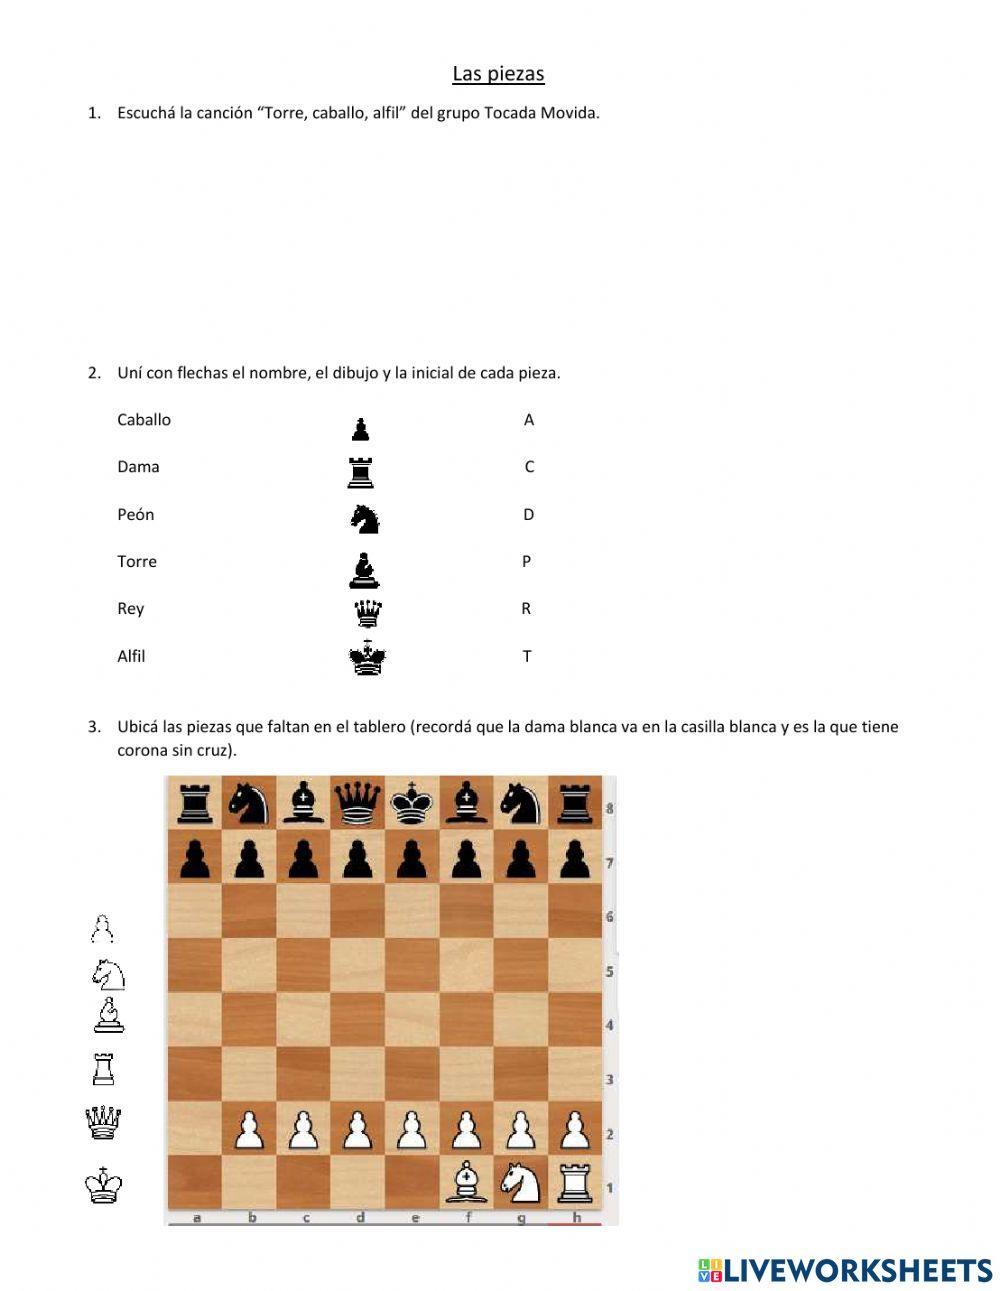 Las piezas de ajedrez